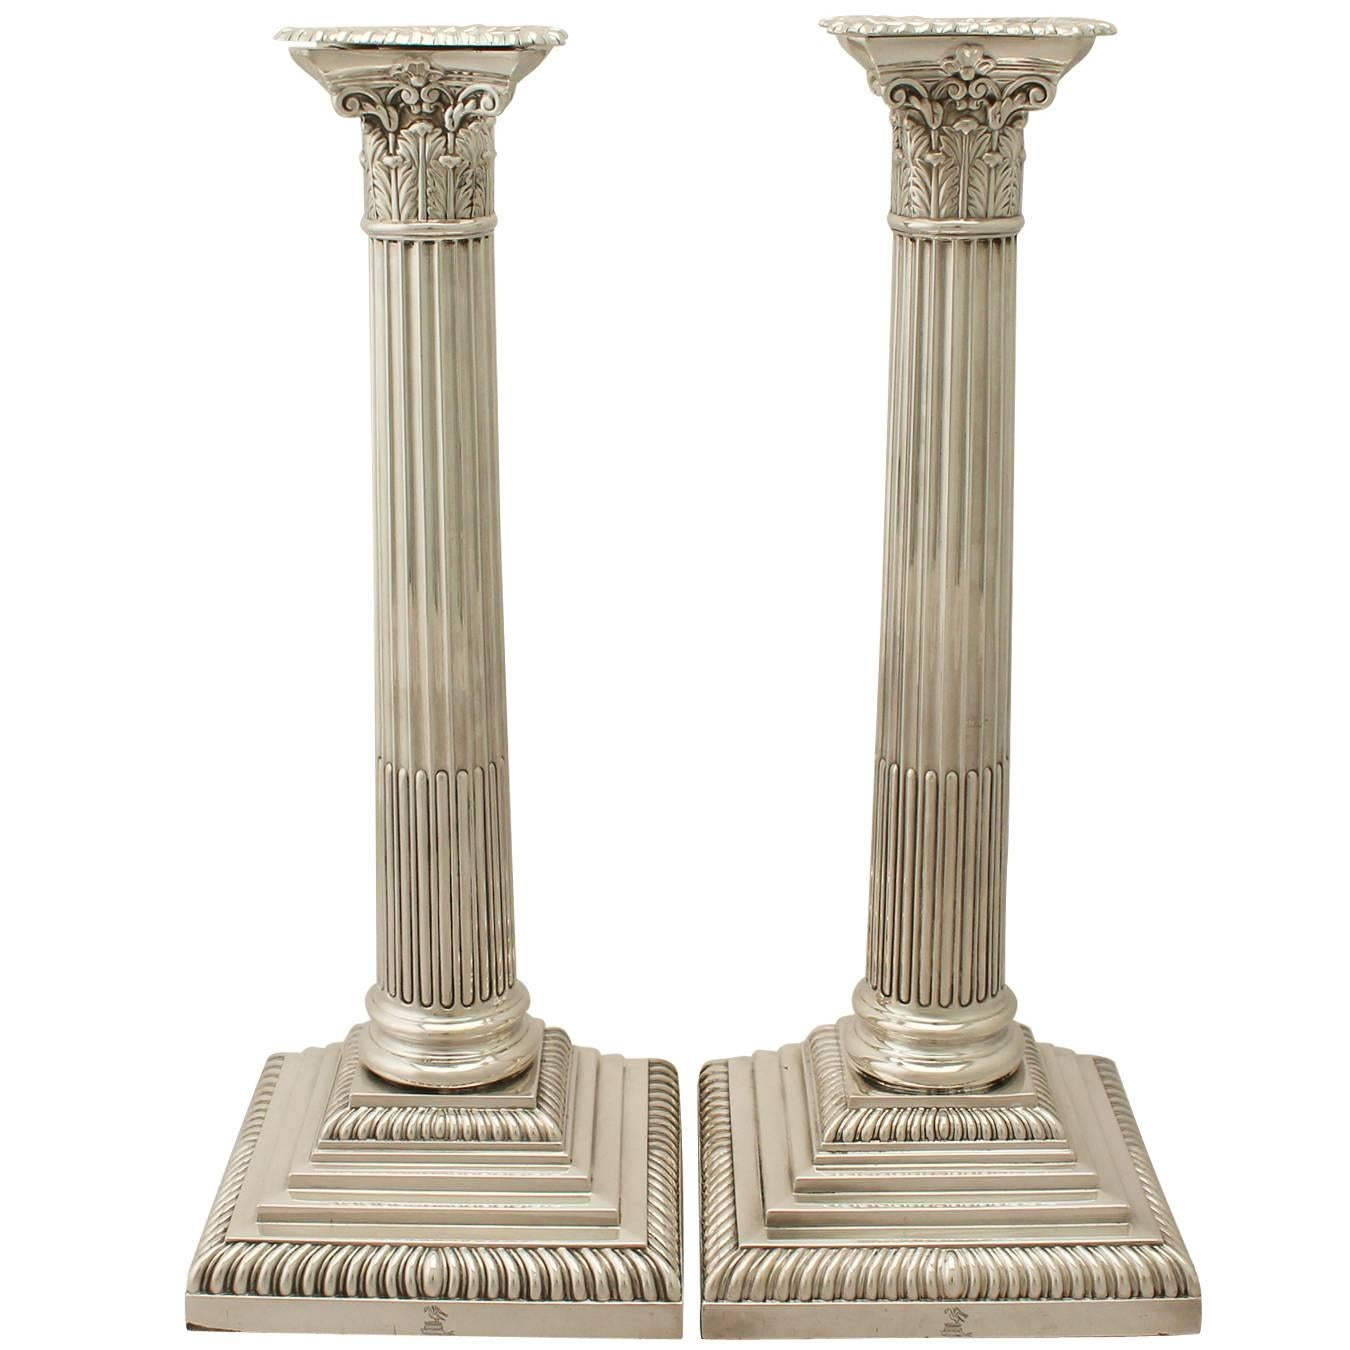 Antique, Sterling Silver Corinthian Column Candlesticks